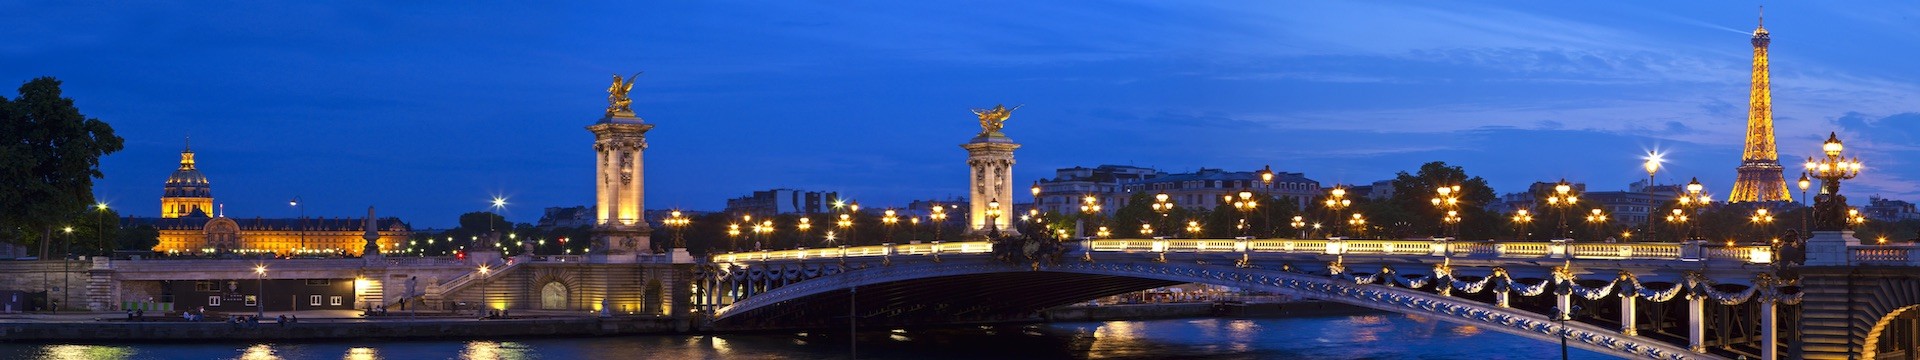 France Real Estate Properties For Sale-Alexandre Bridge in Paris